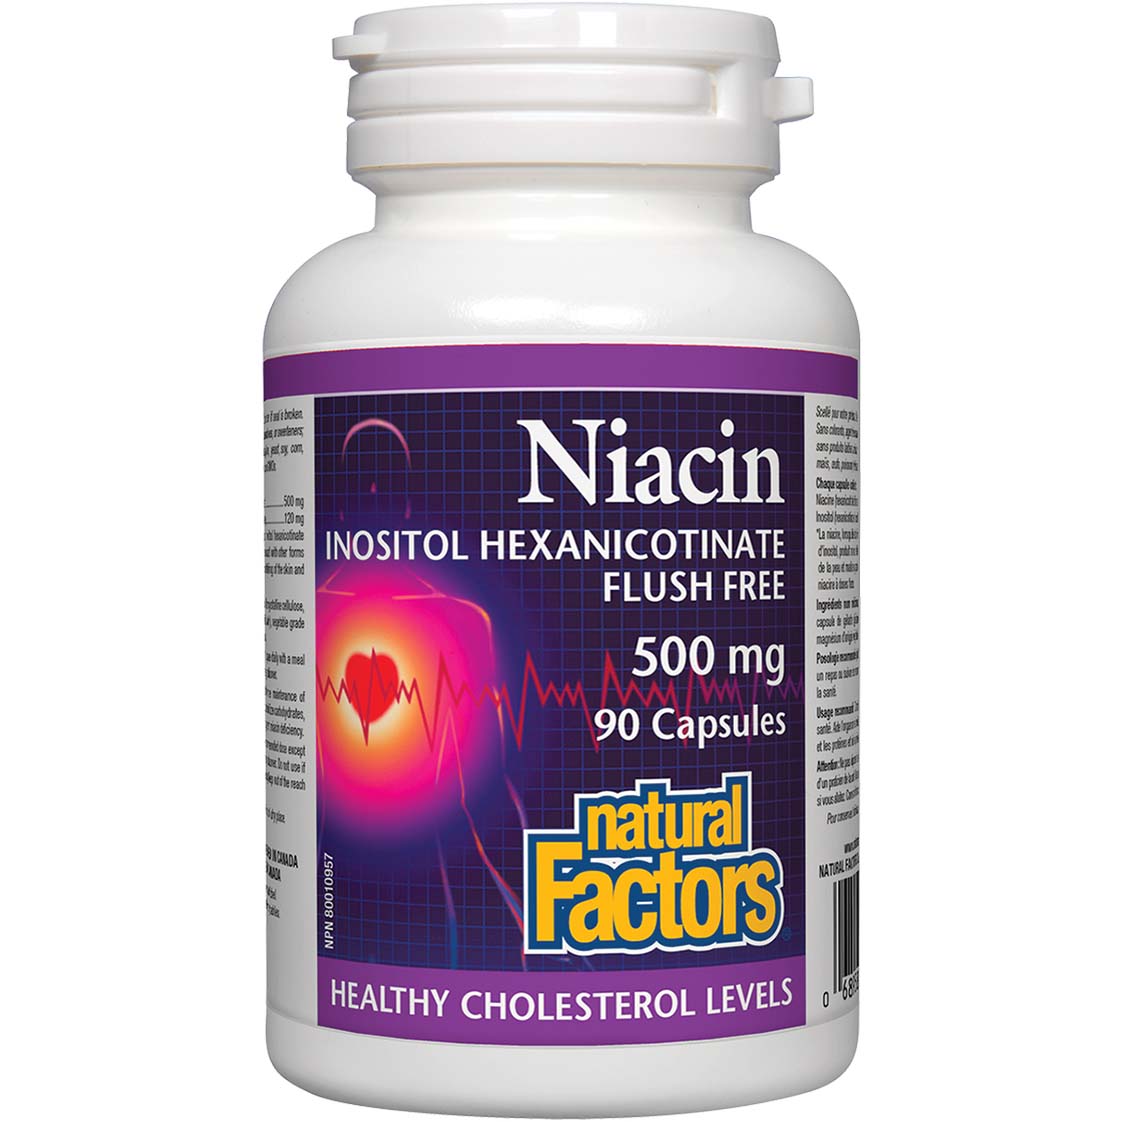 Natural Factors Niacin Inositol Hexanicotinate 90 Capsules 500 mg